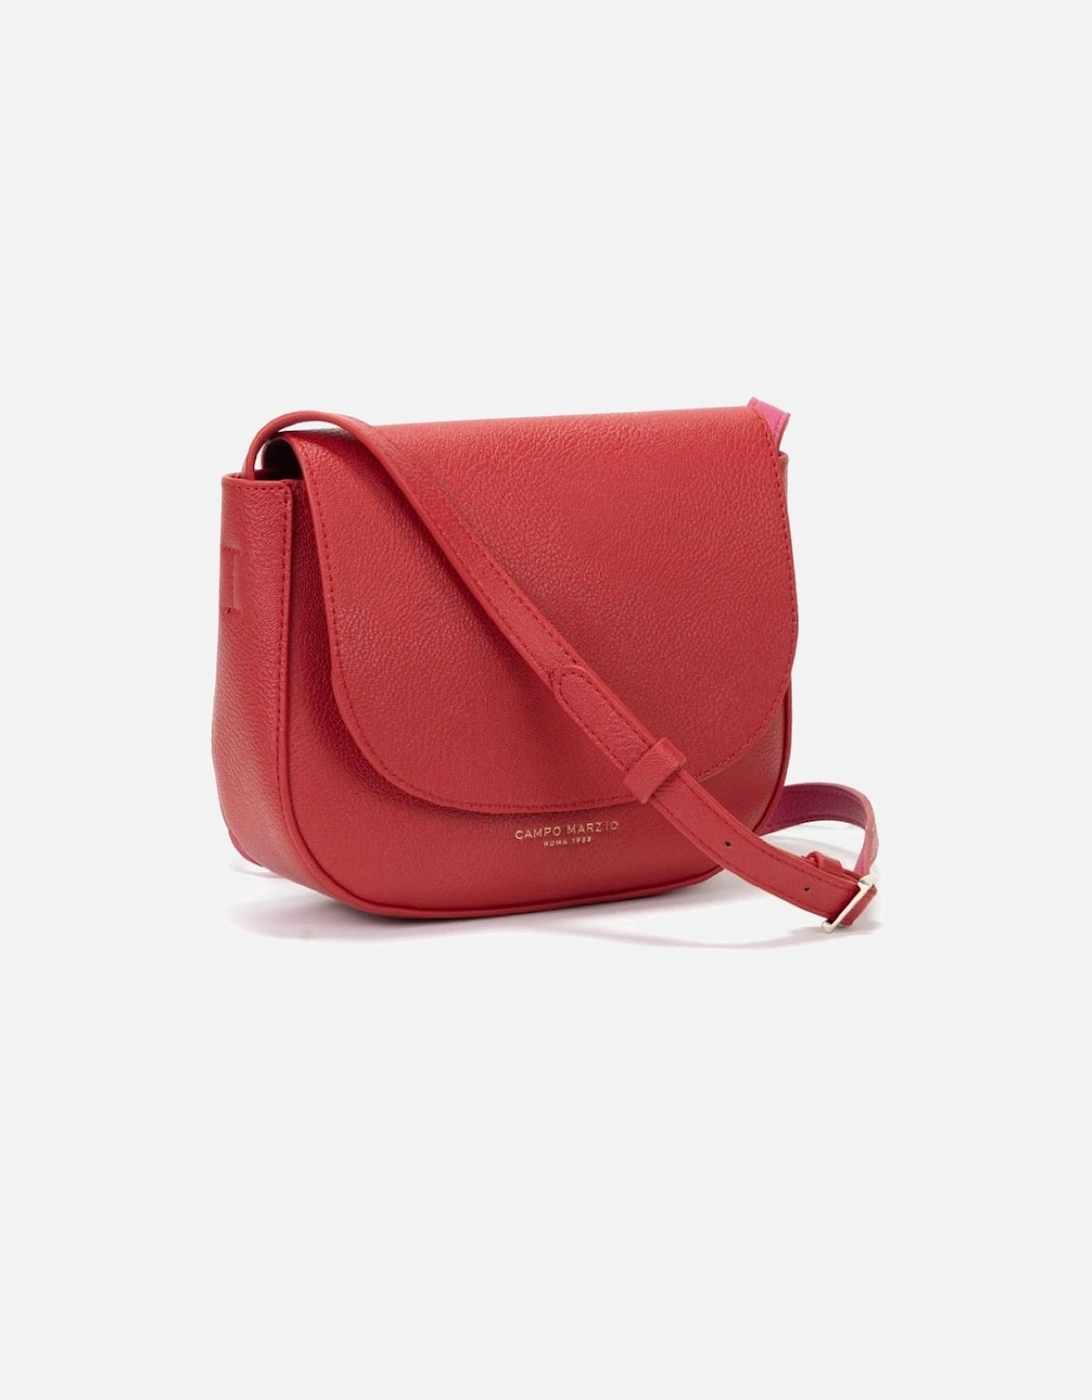 Rachel Mini Bag - Cherry Red Fuchsia